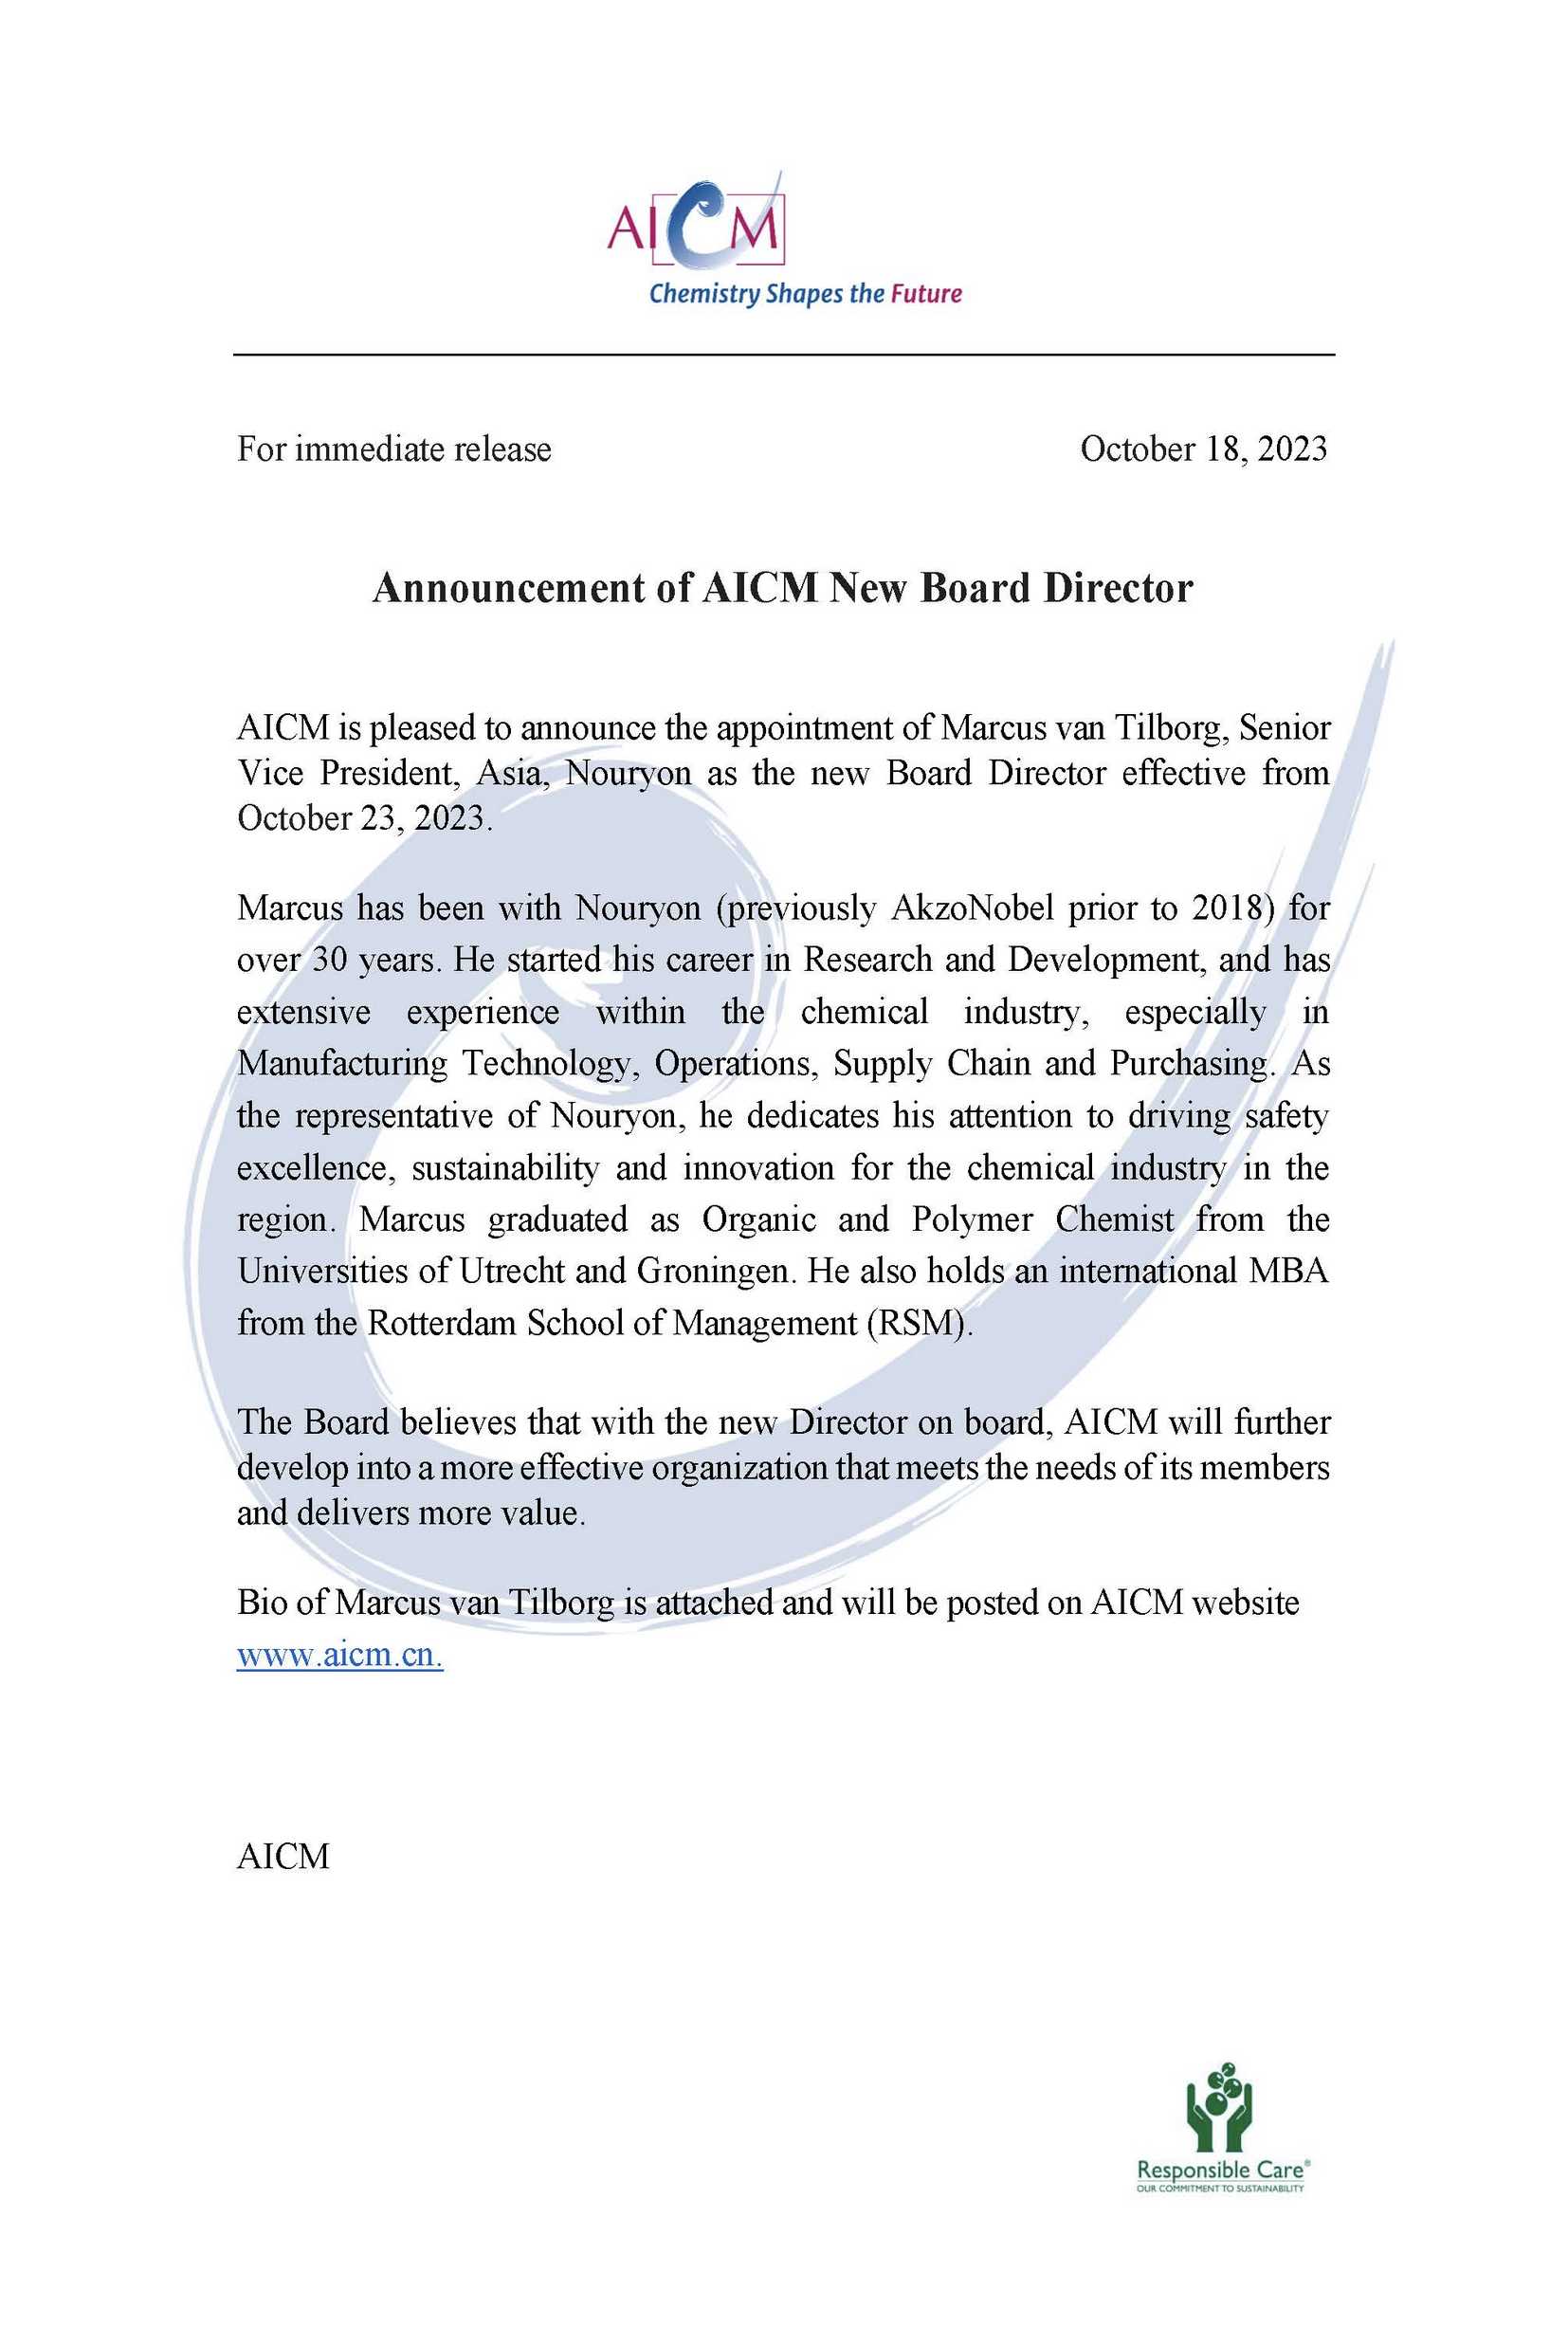 AICM new board director announcement_Marcus van Tilborg_EN_JPG_1654.jpg